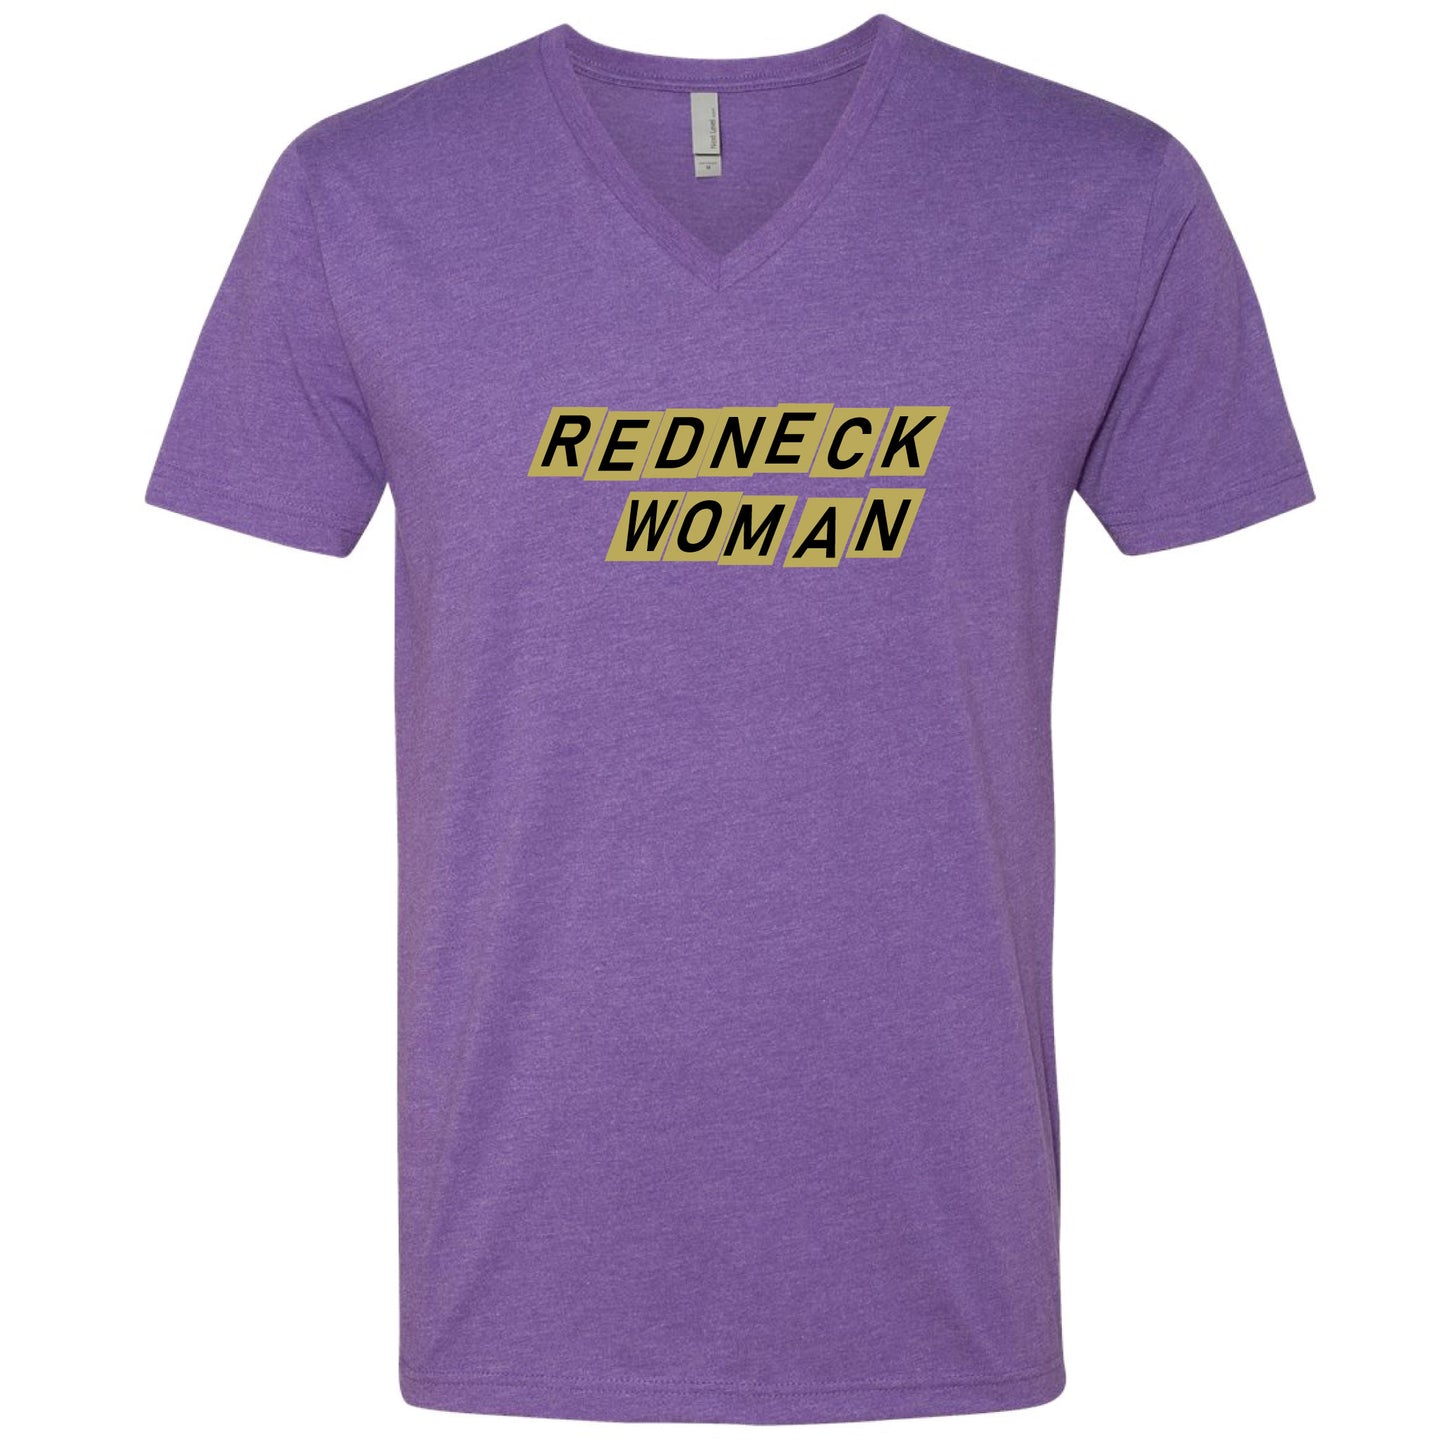 Redneck Woman V-Neck T-Shirt